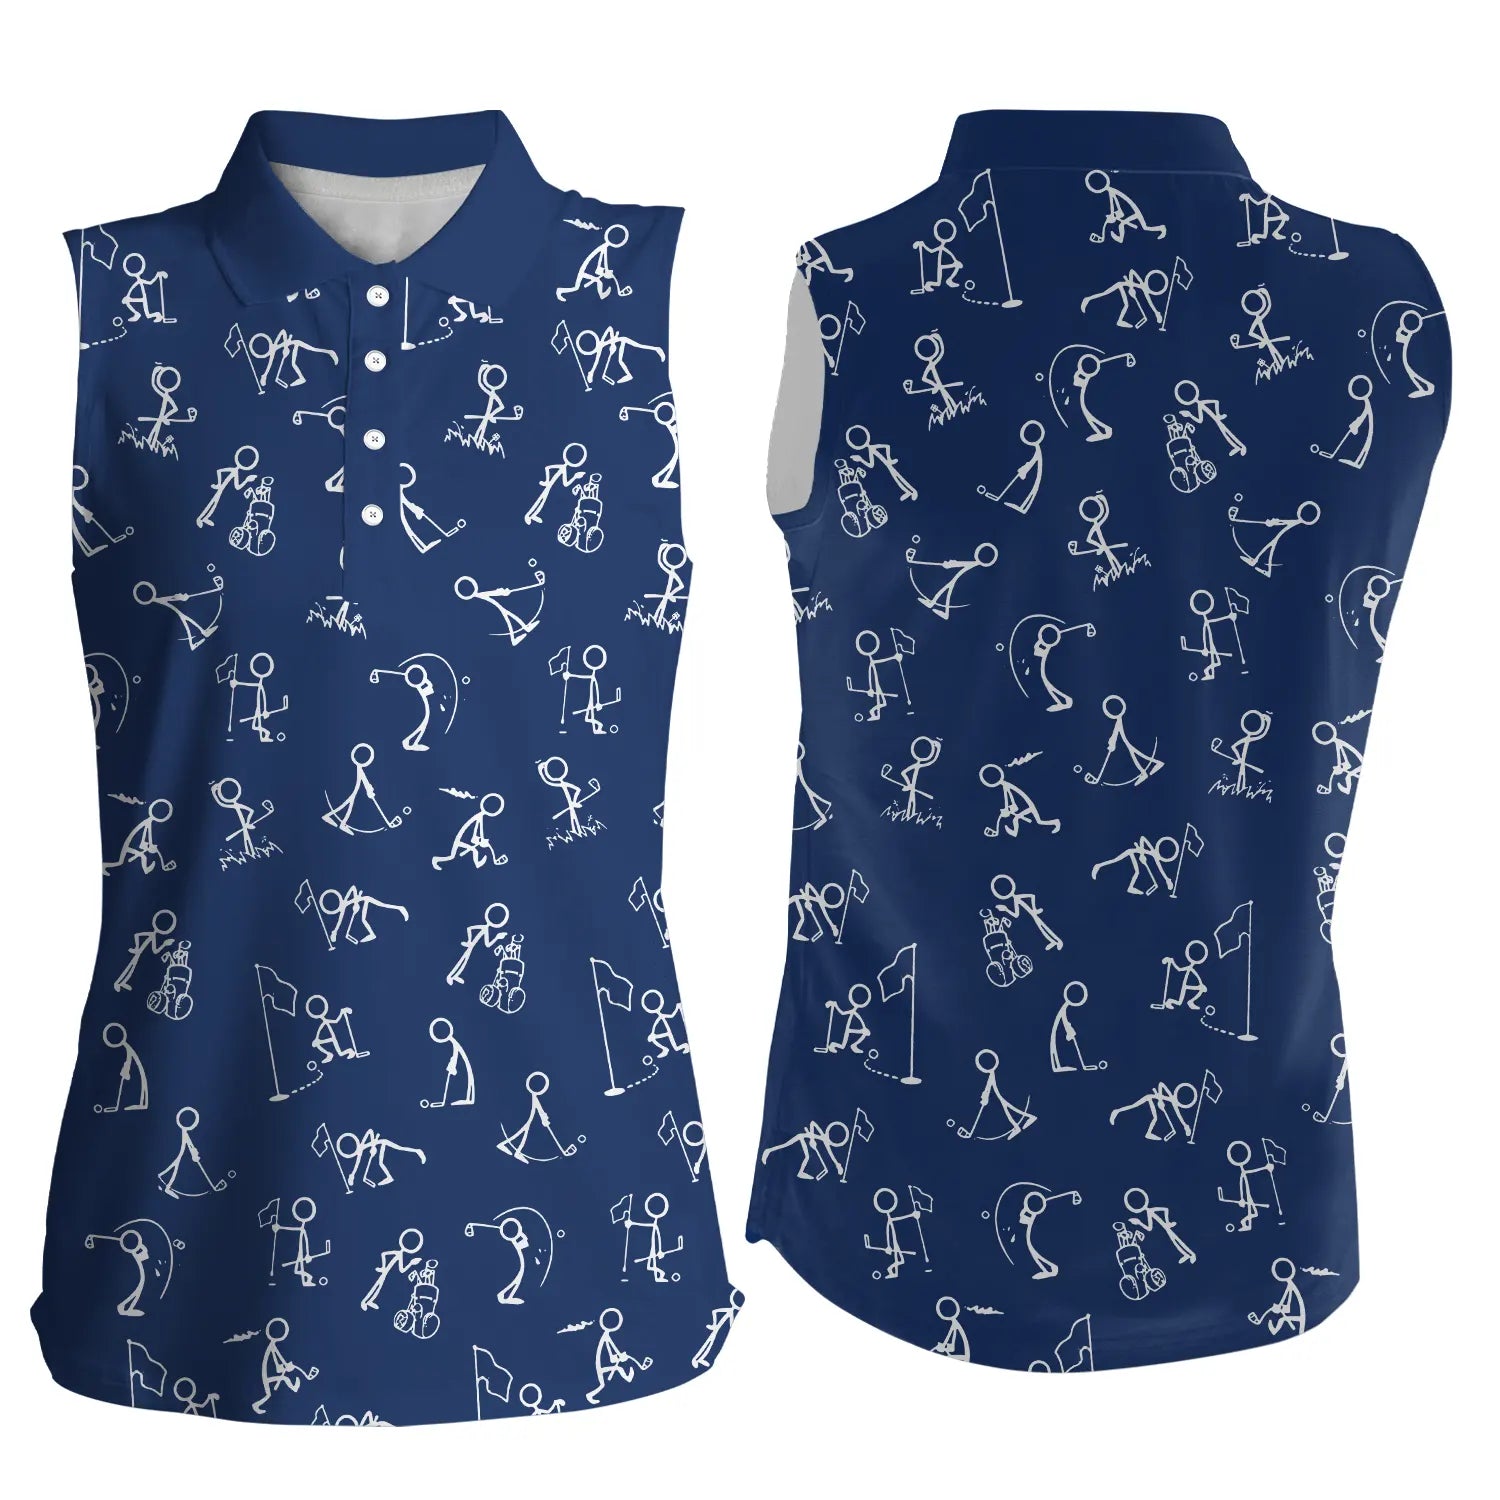 Women sleeveless polo shirts funny golf pattern navy blue polo shirt best womens golf wear